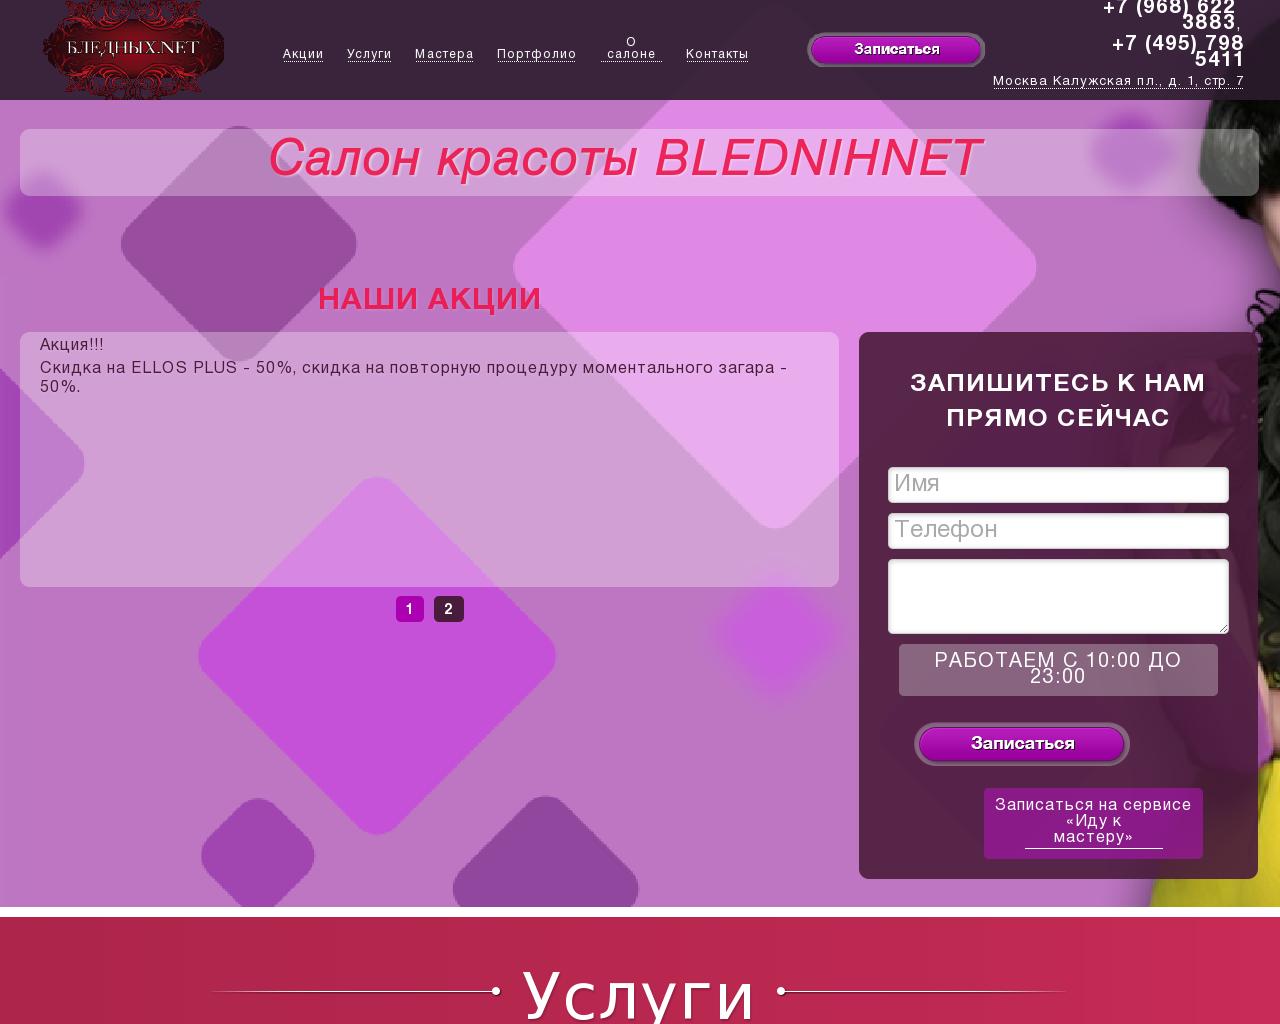 Изображение сайта blednihnet.ru в разрешении 1280x1024